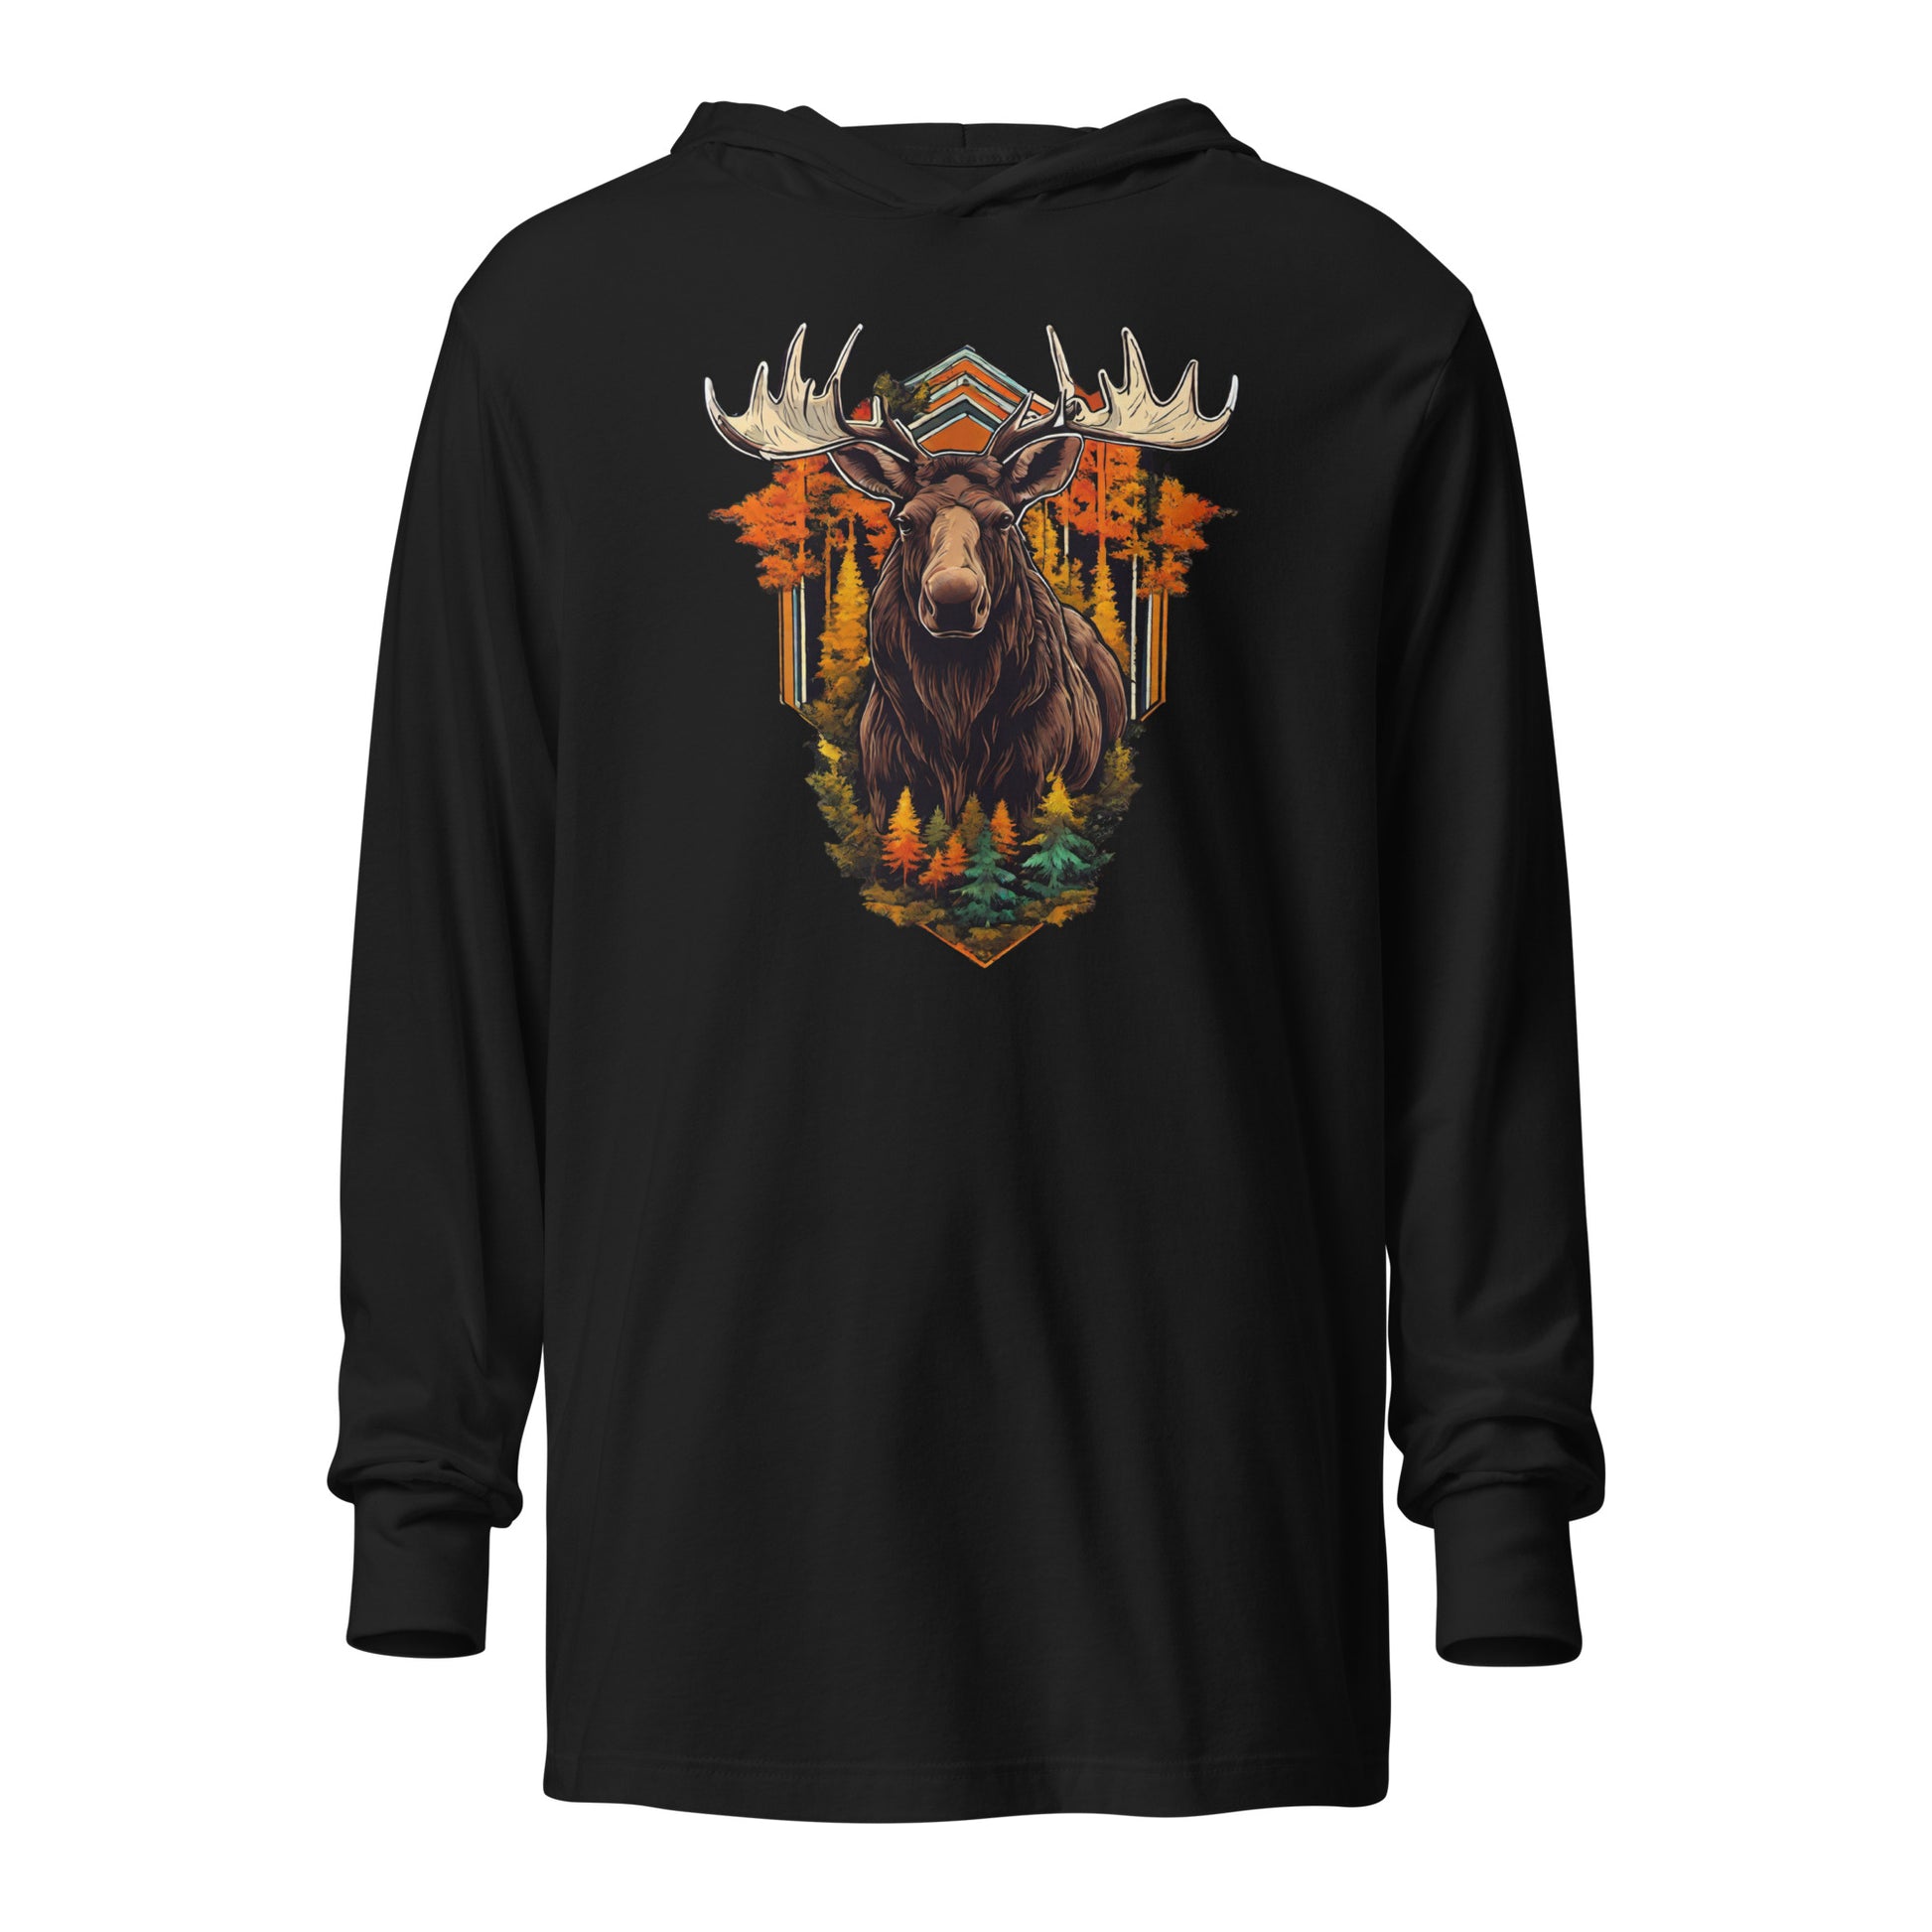 Moose & Forest Emblem Hooded Long-Sleeve Tee Black